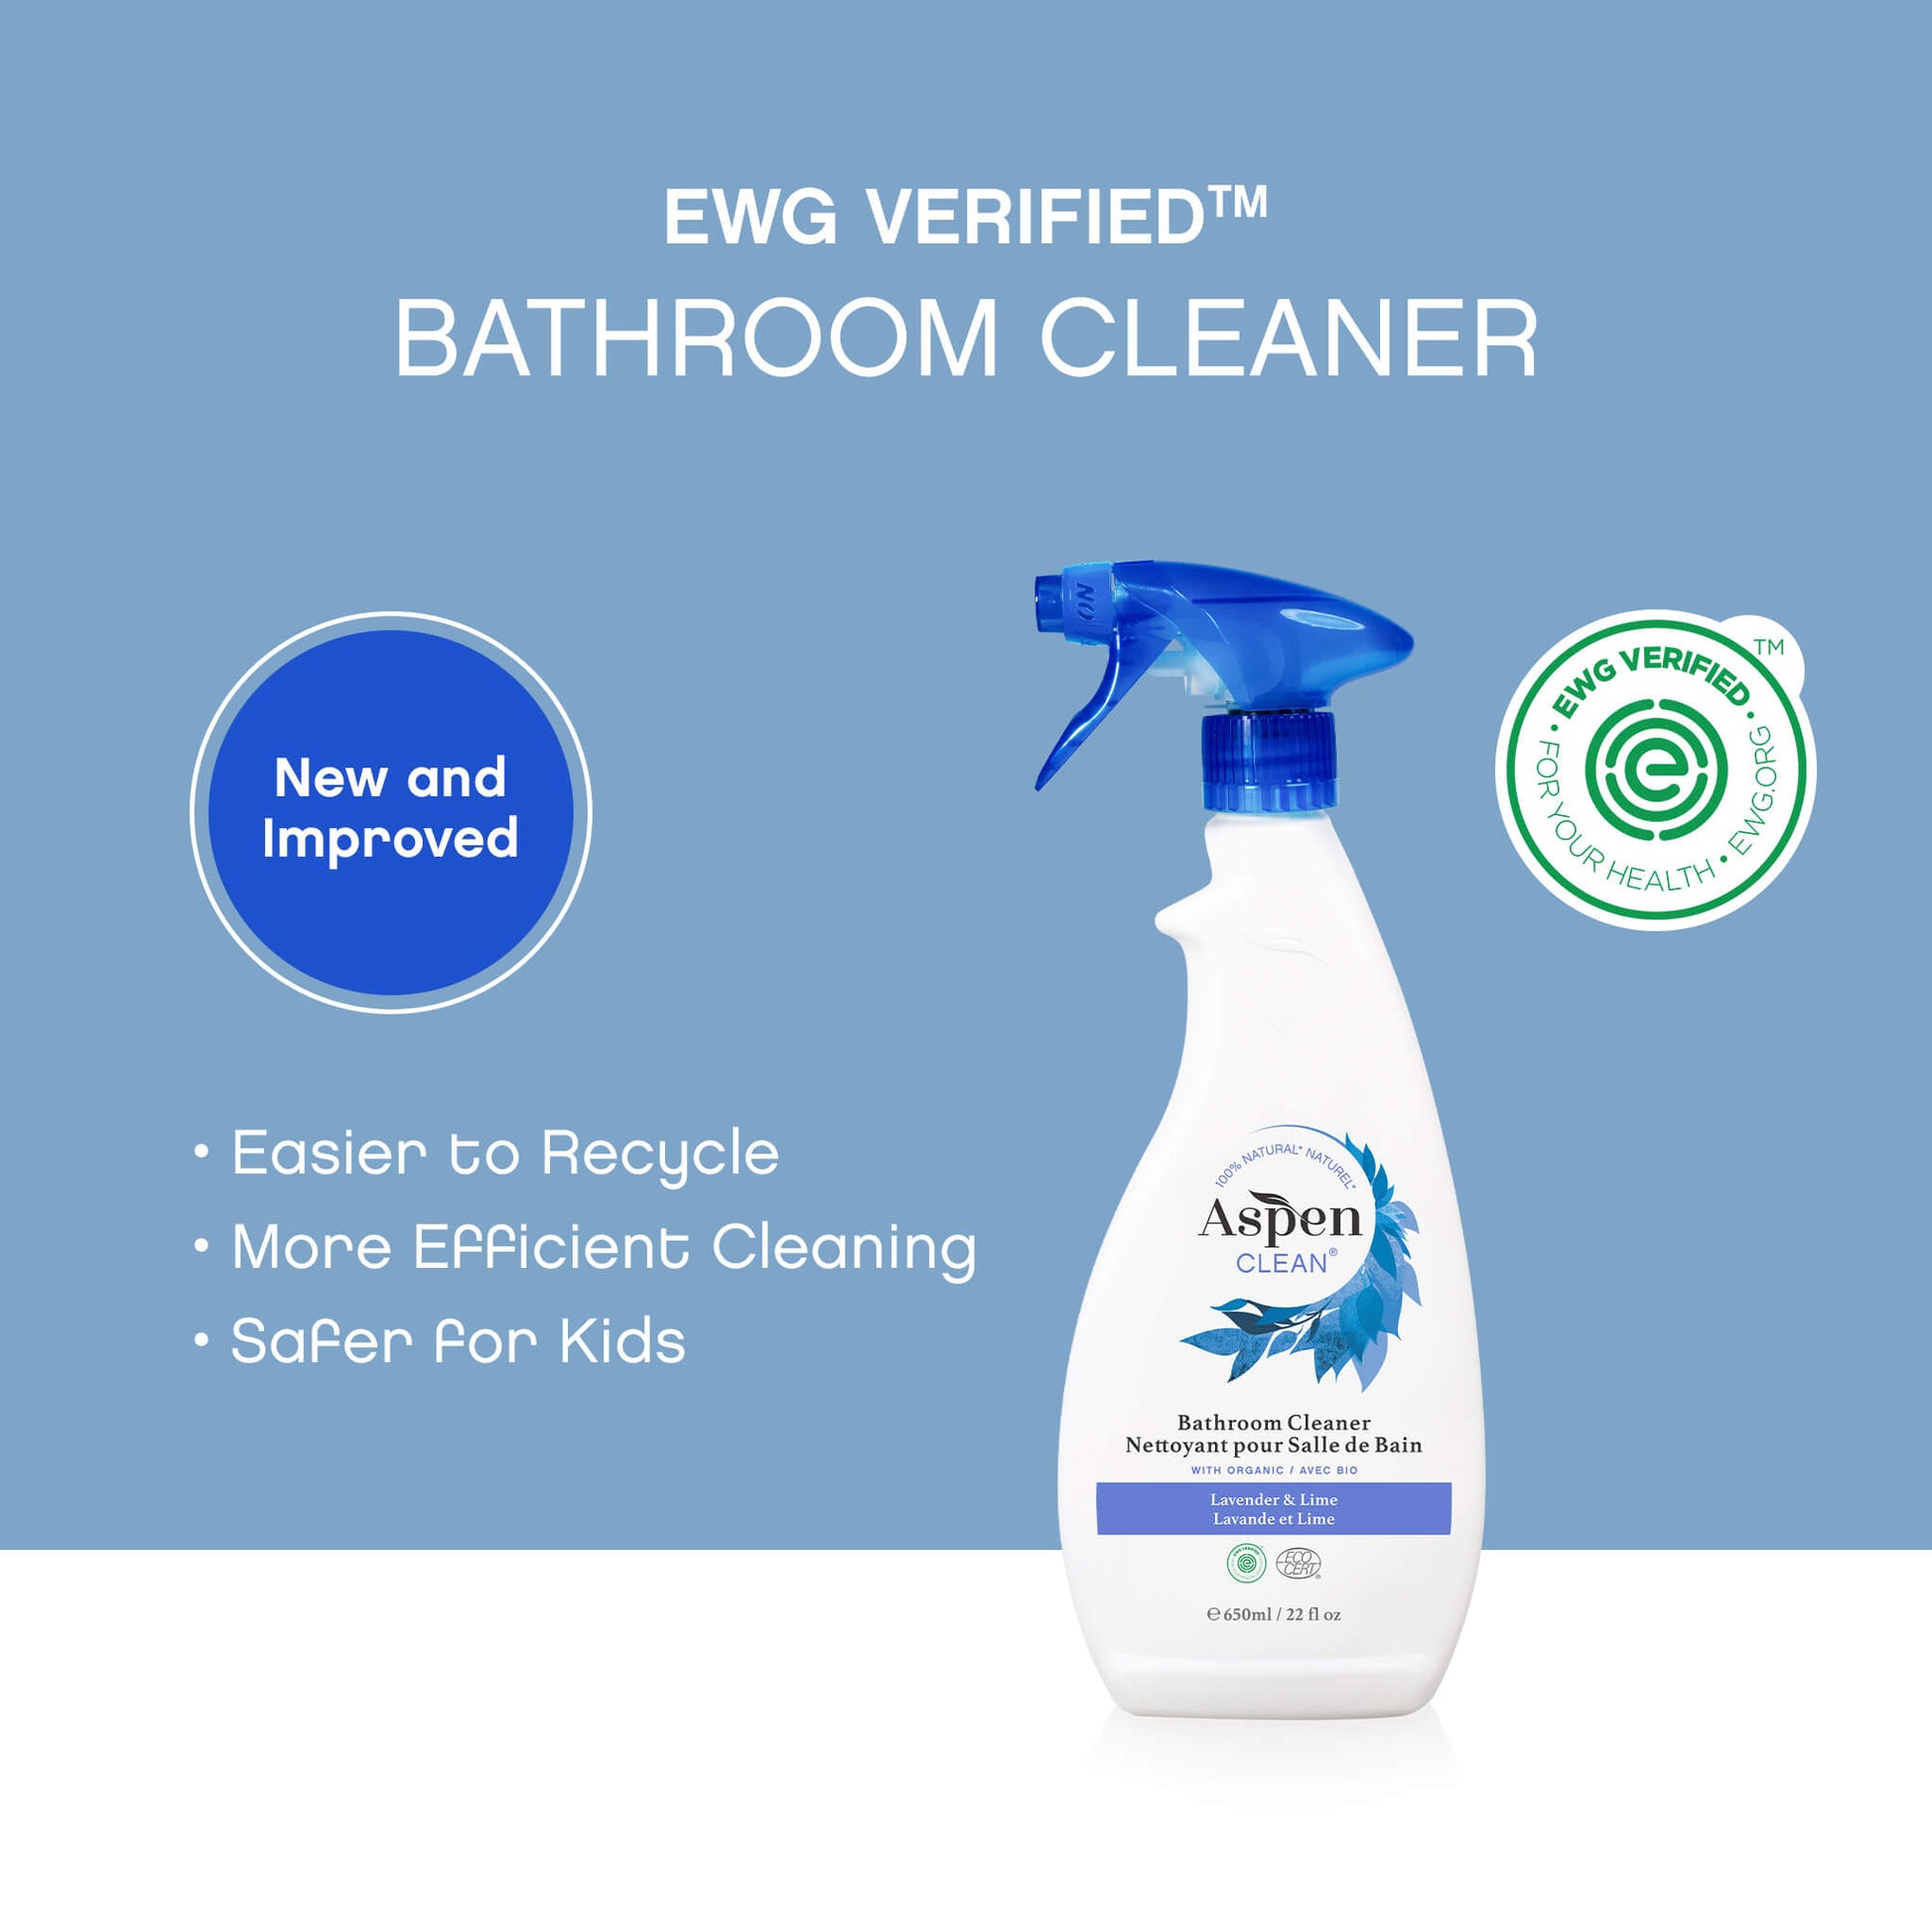 Daily Shower Spray 16 Fl Oz Eucalyptus Shower Spray Daily Shower Spray  Bathroom Cleaner Organic Shower Spray Natural Cleaner 